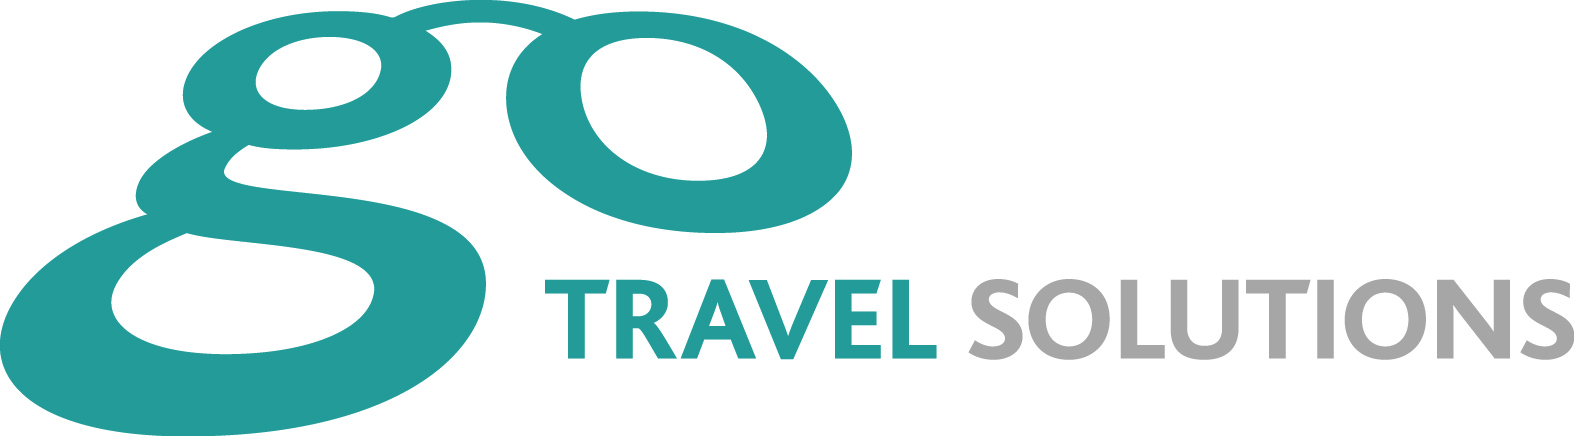 logo for Go Travel Solutions